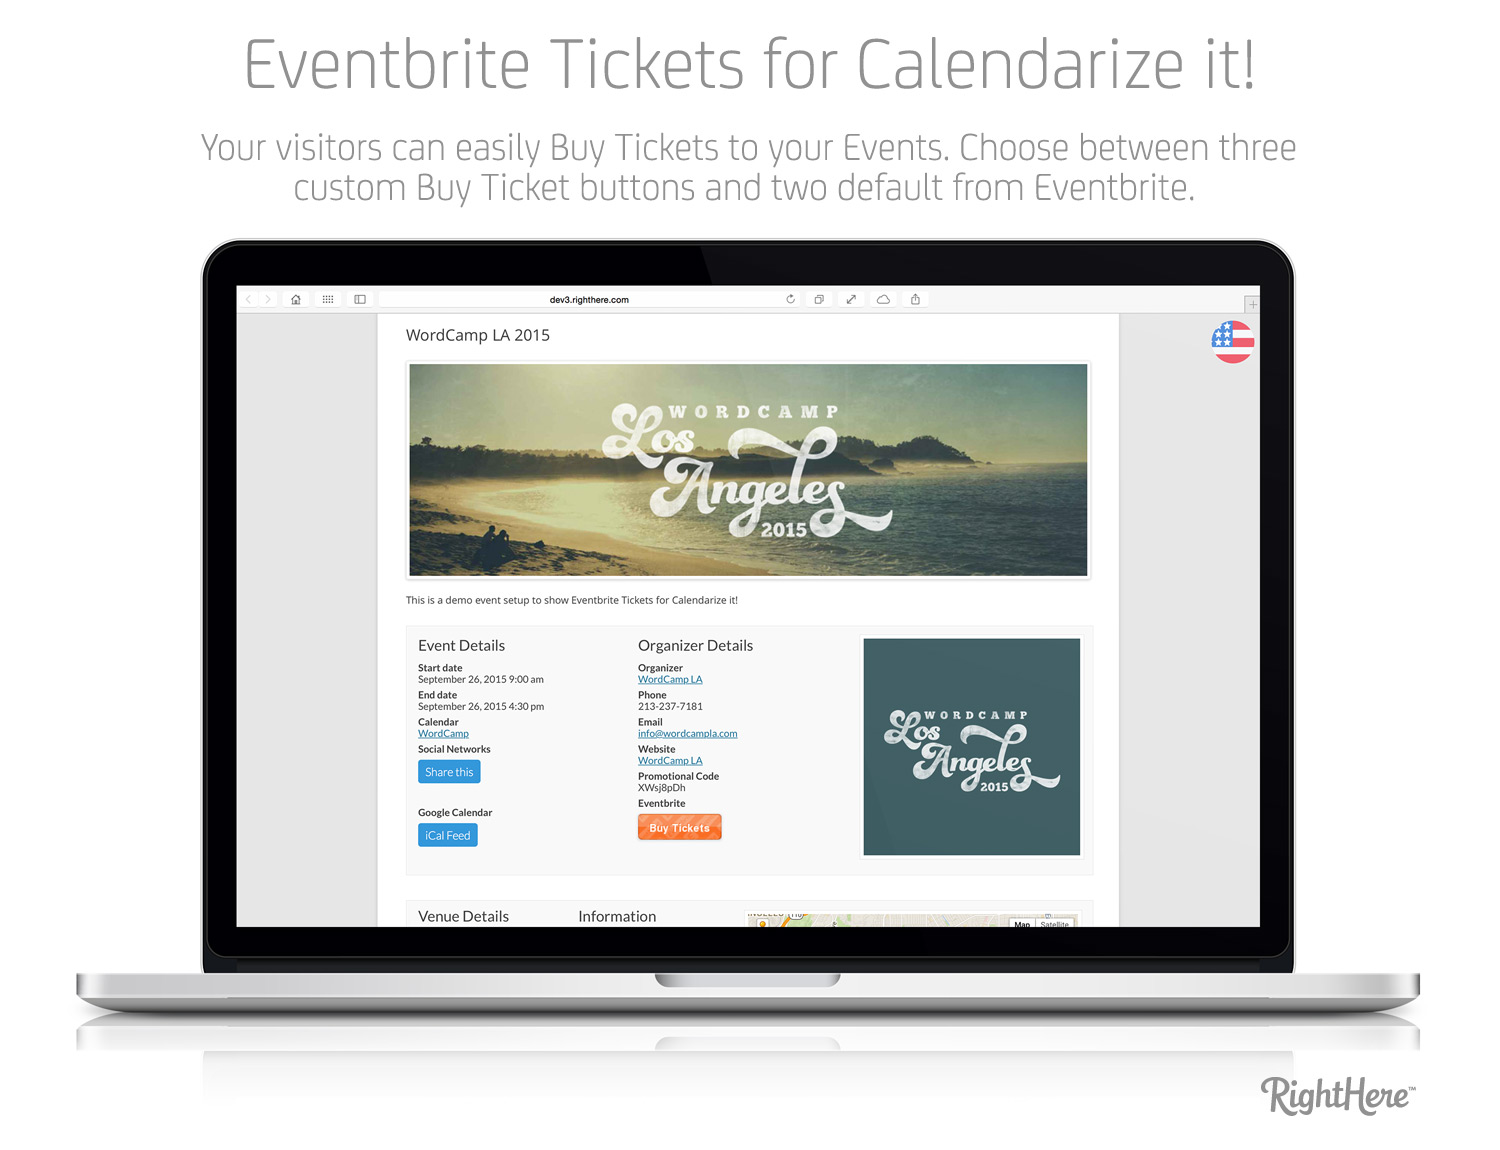 Eventbrite Tickets for Calendarize it! - Event Details Page